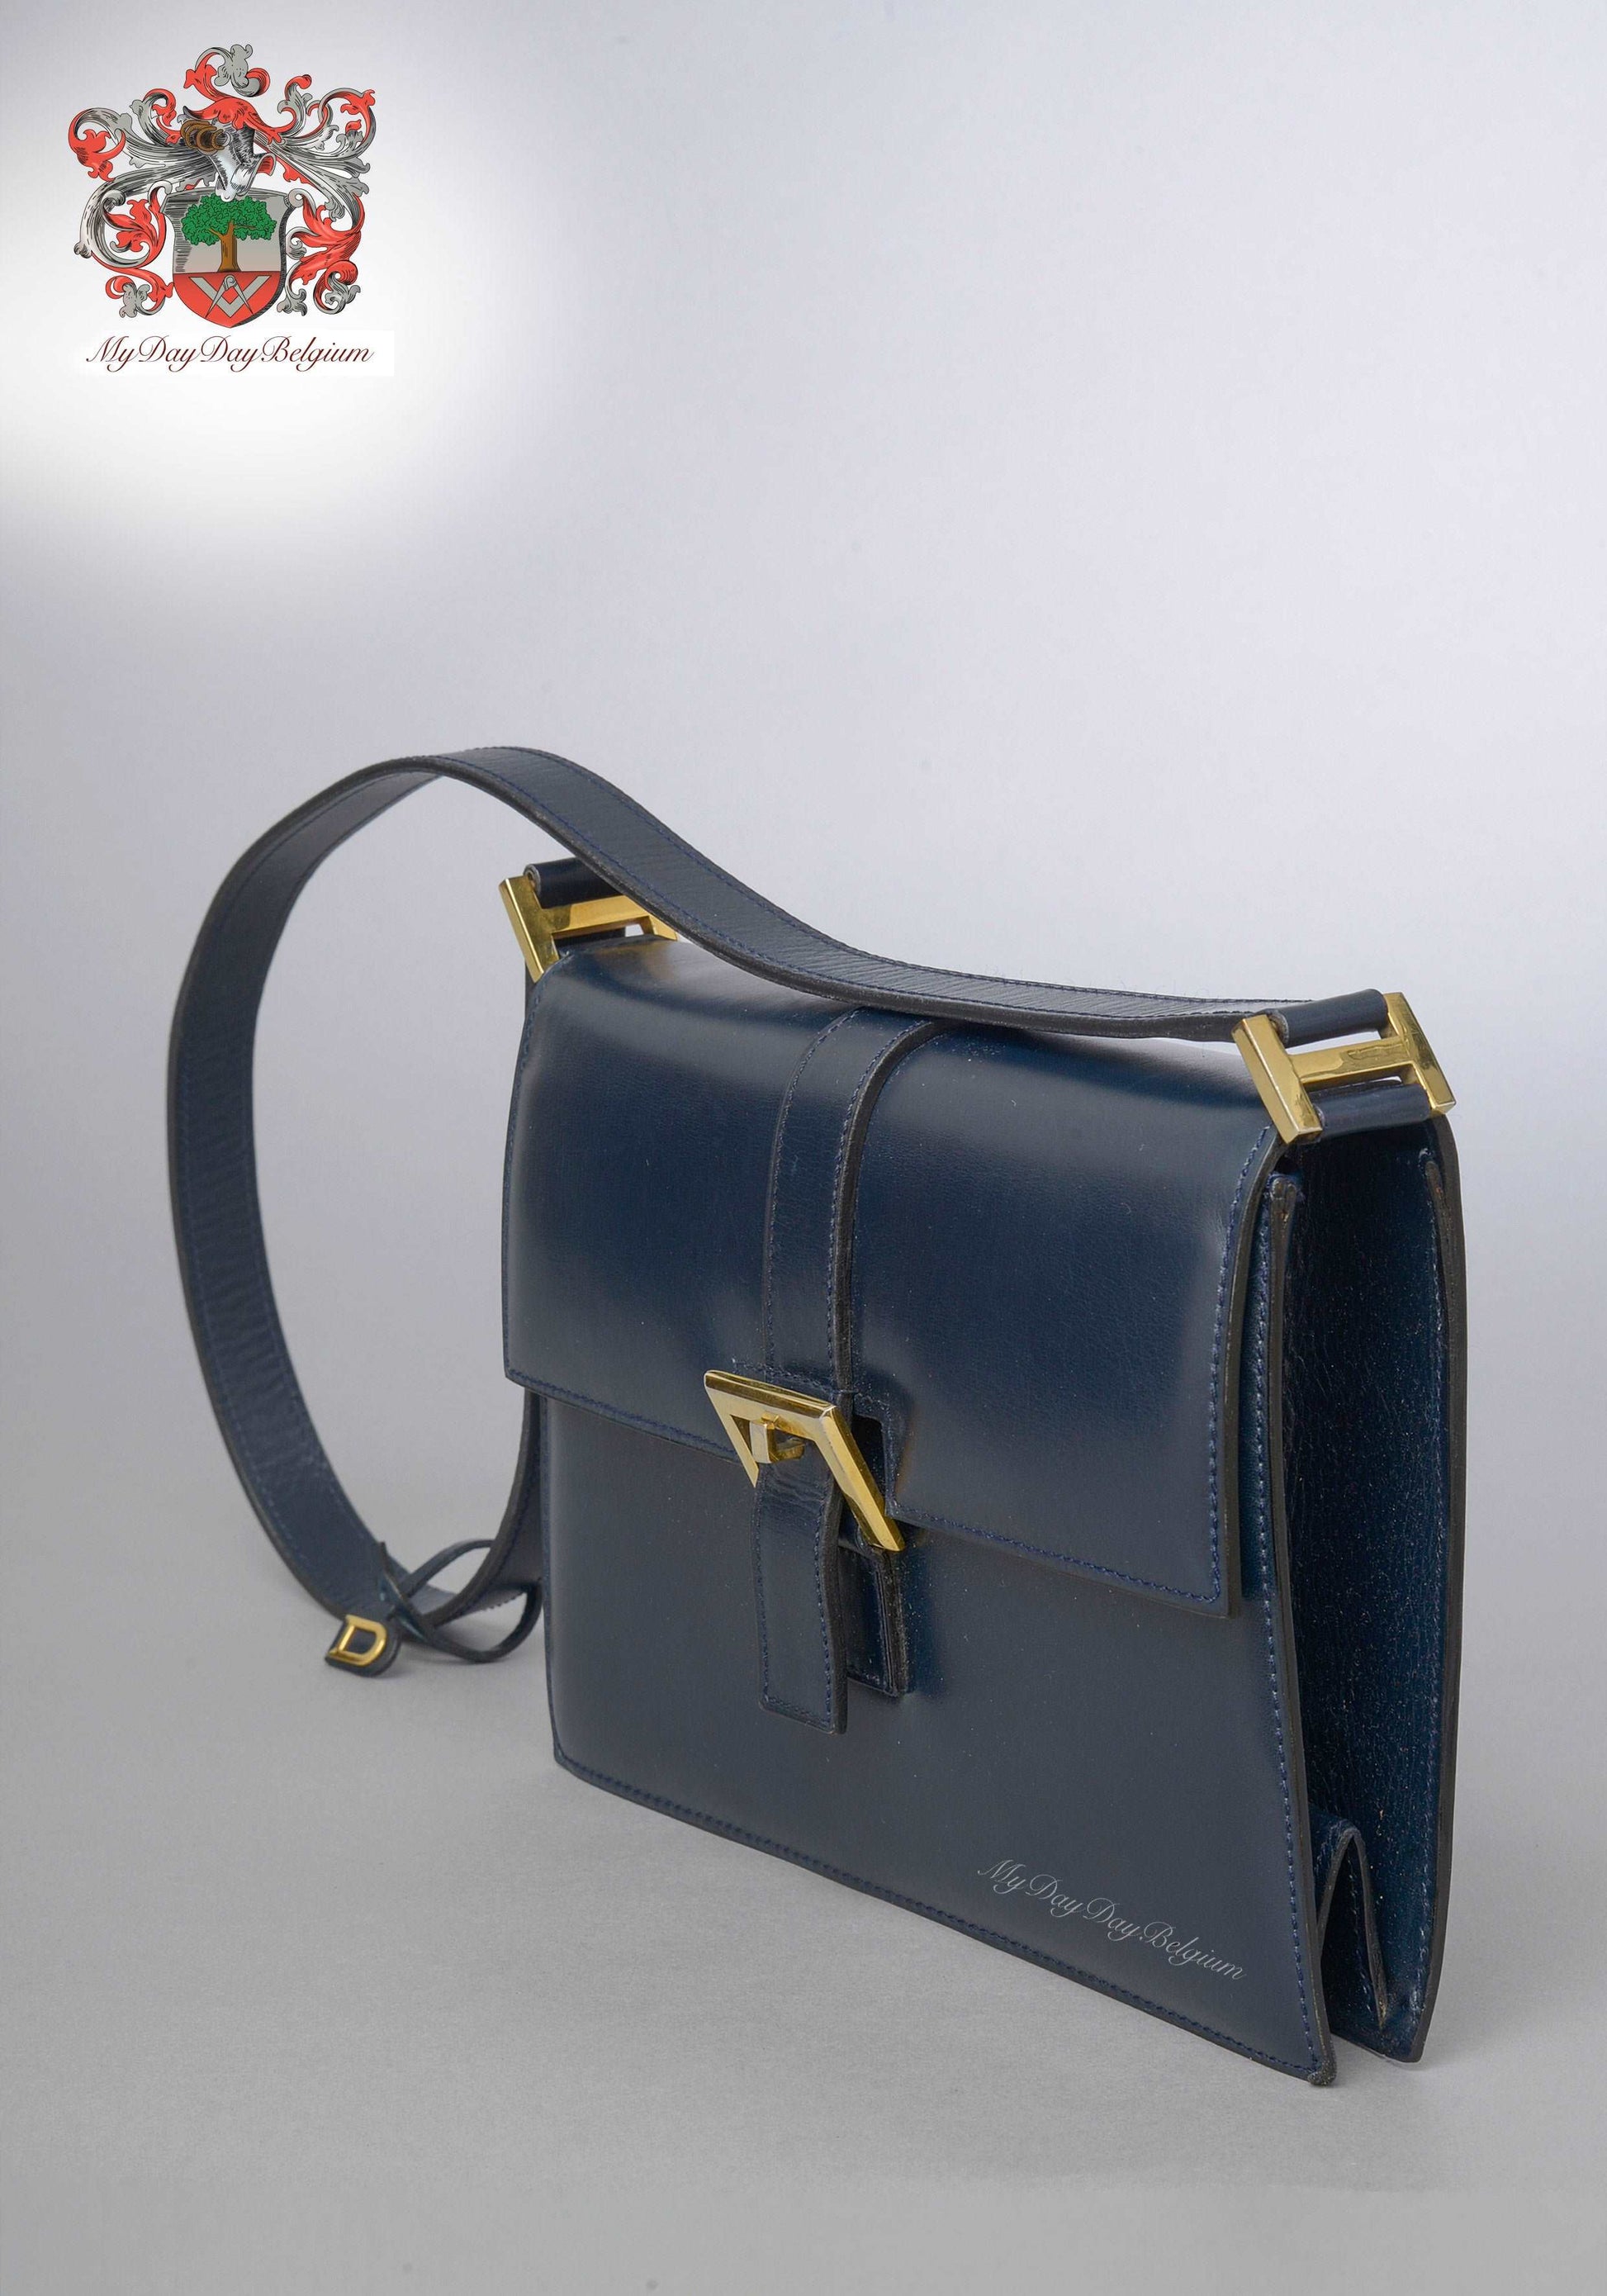 Delvaux Top Handle Bag 1969, Delvaux Handbags